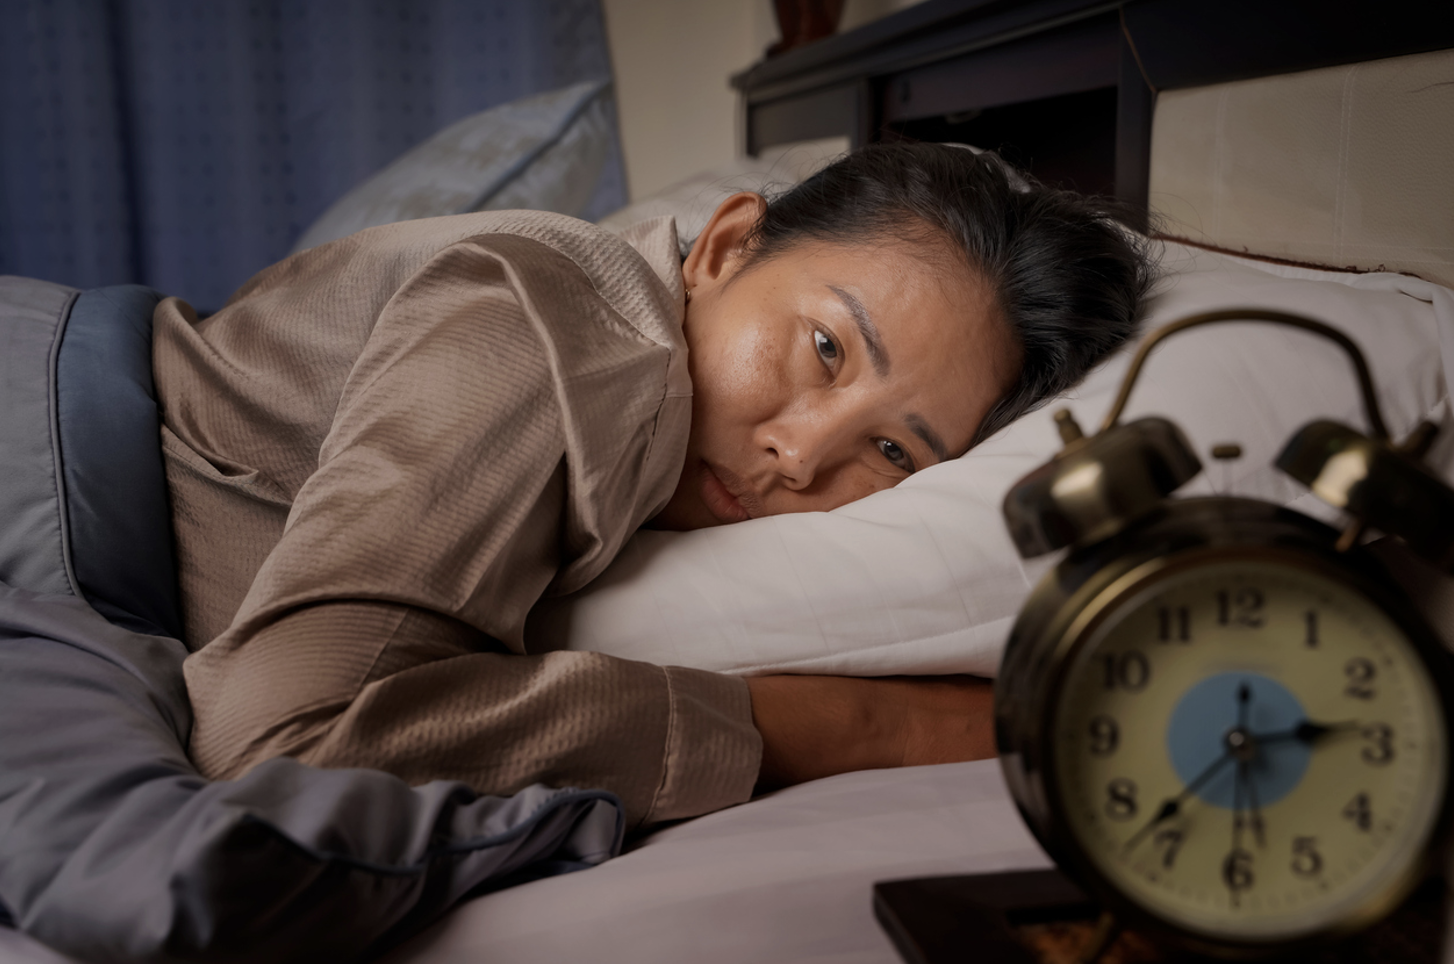 Woman lies awake in bed looking at clock